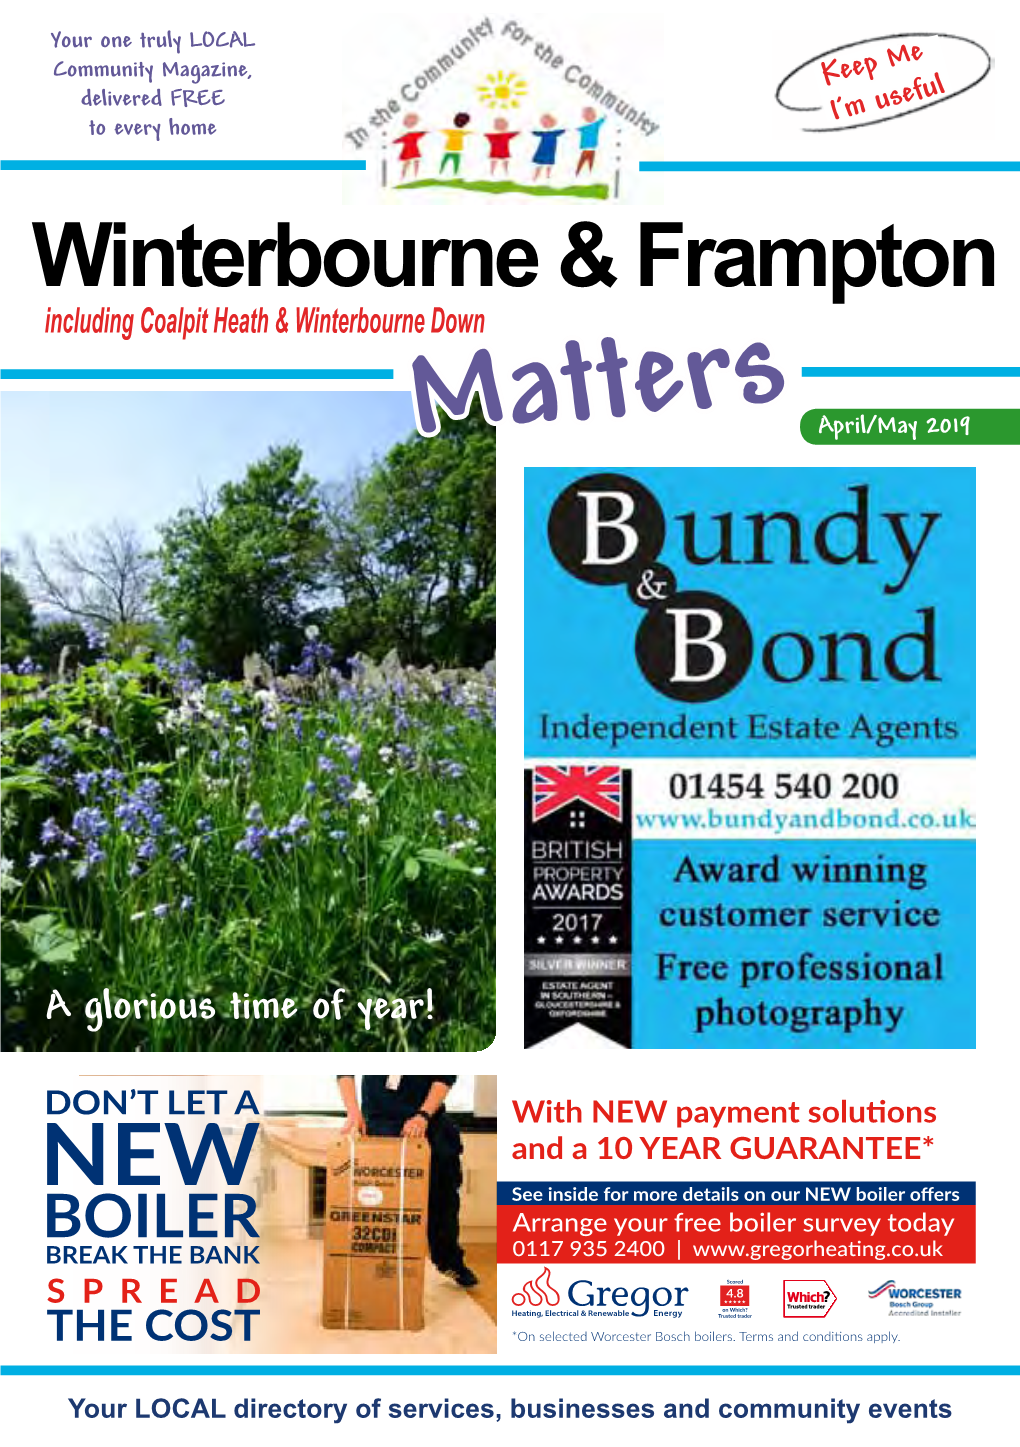 Winterbourne & Frampton